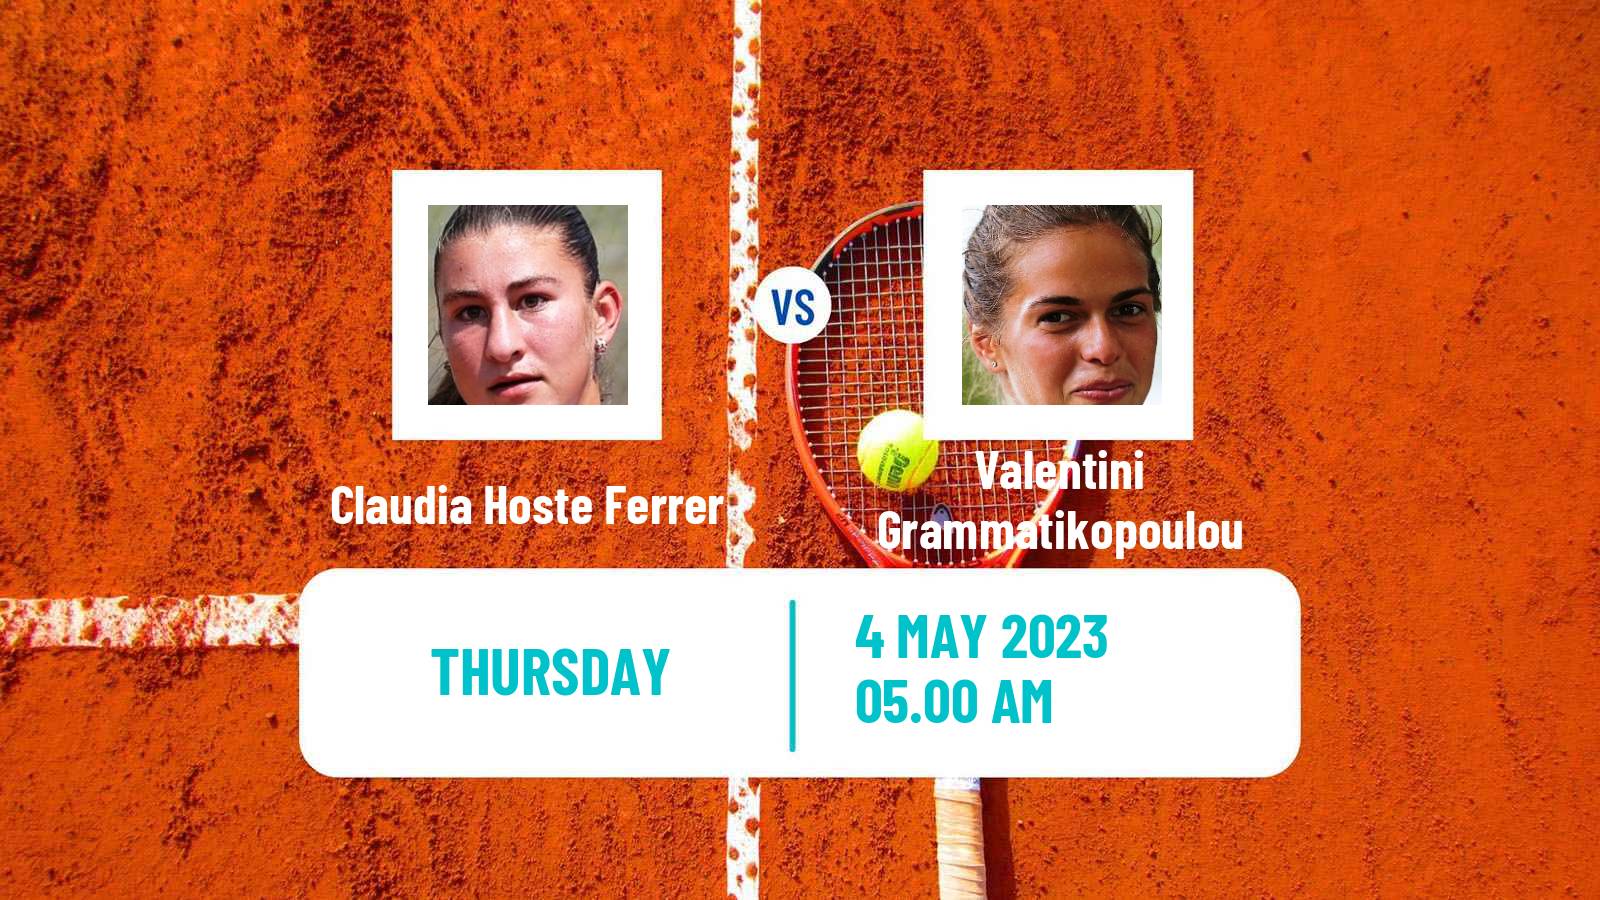 Tennis ITF Tournaments Claudia Hoste Ferrer - Valentini Grammatikopoulou